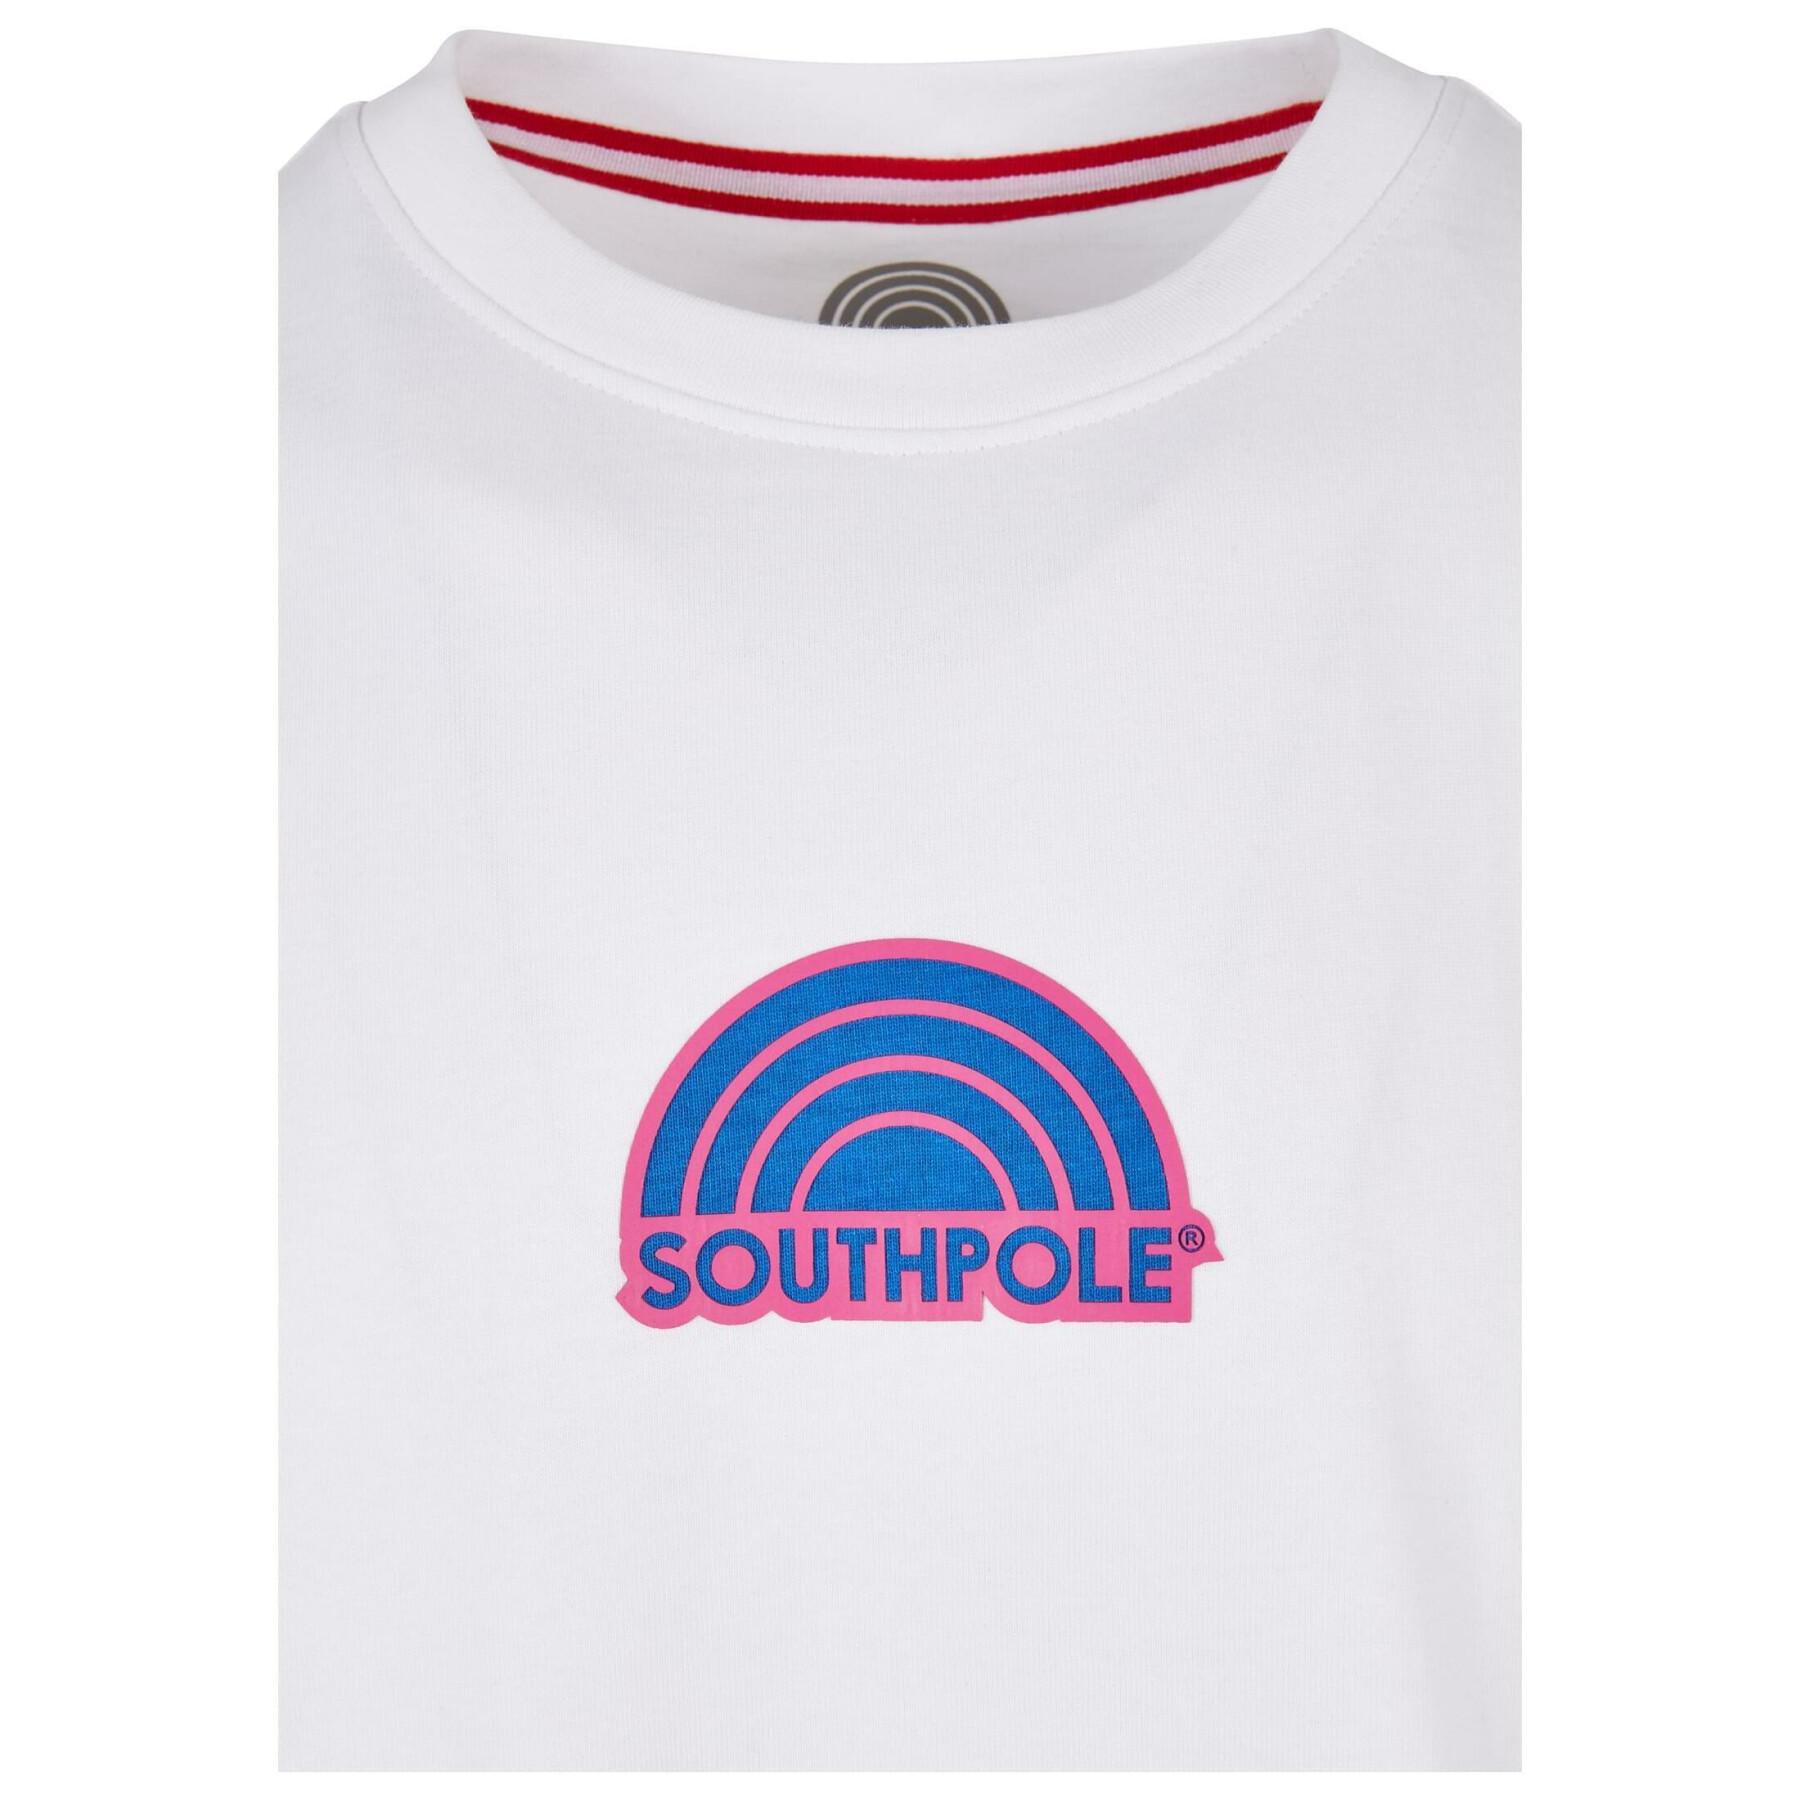 Camiseta Southpole Graphic 1991